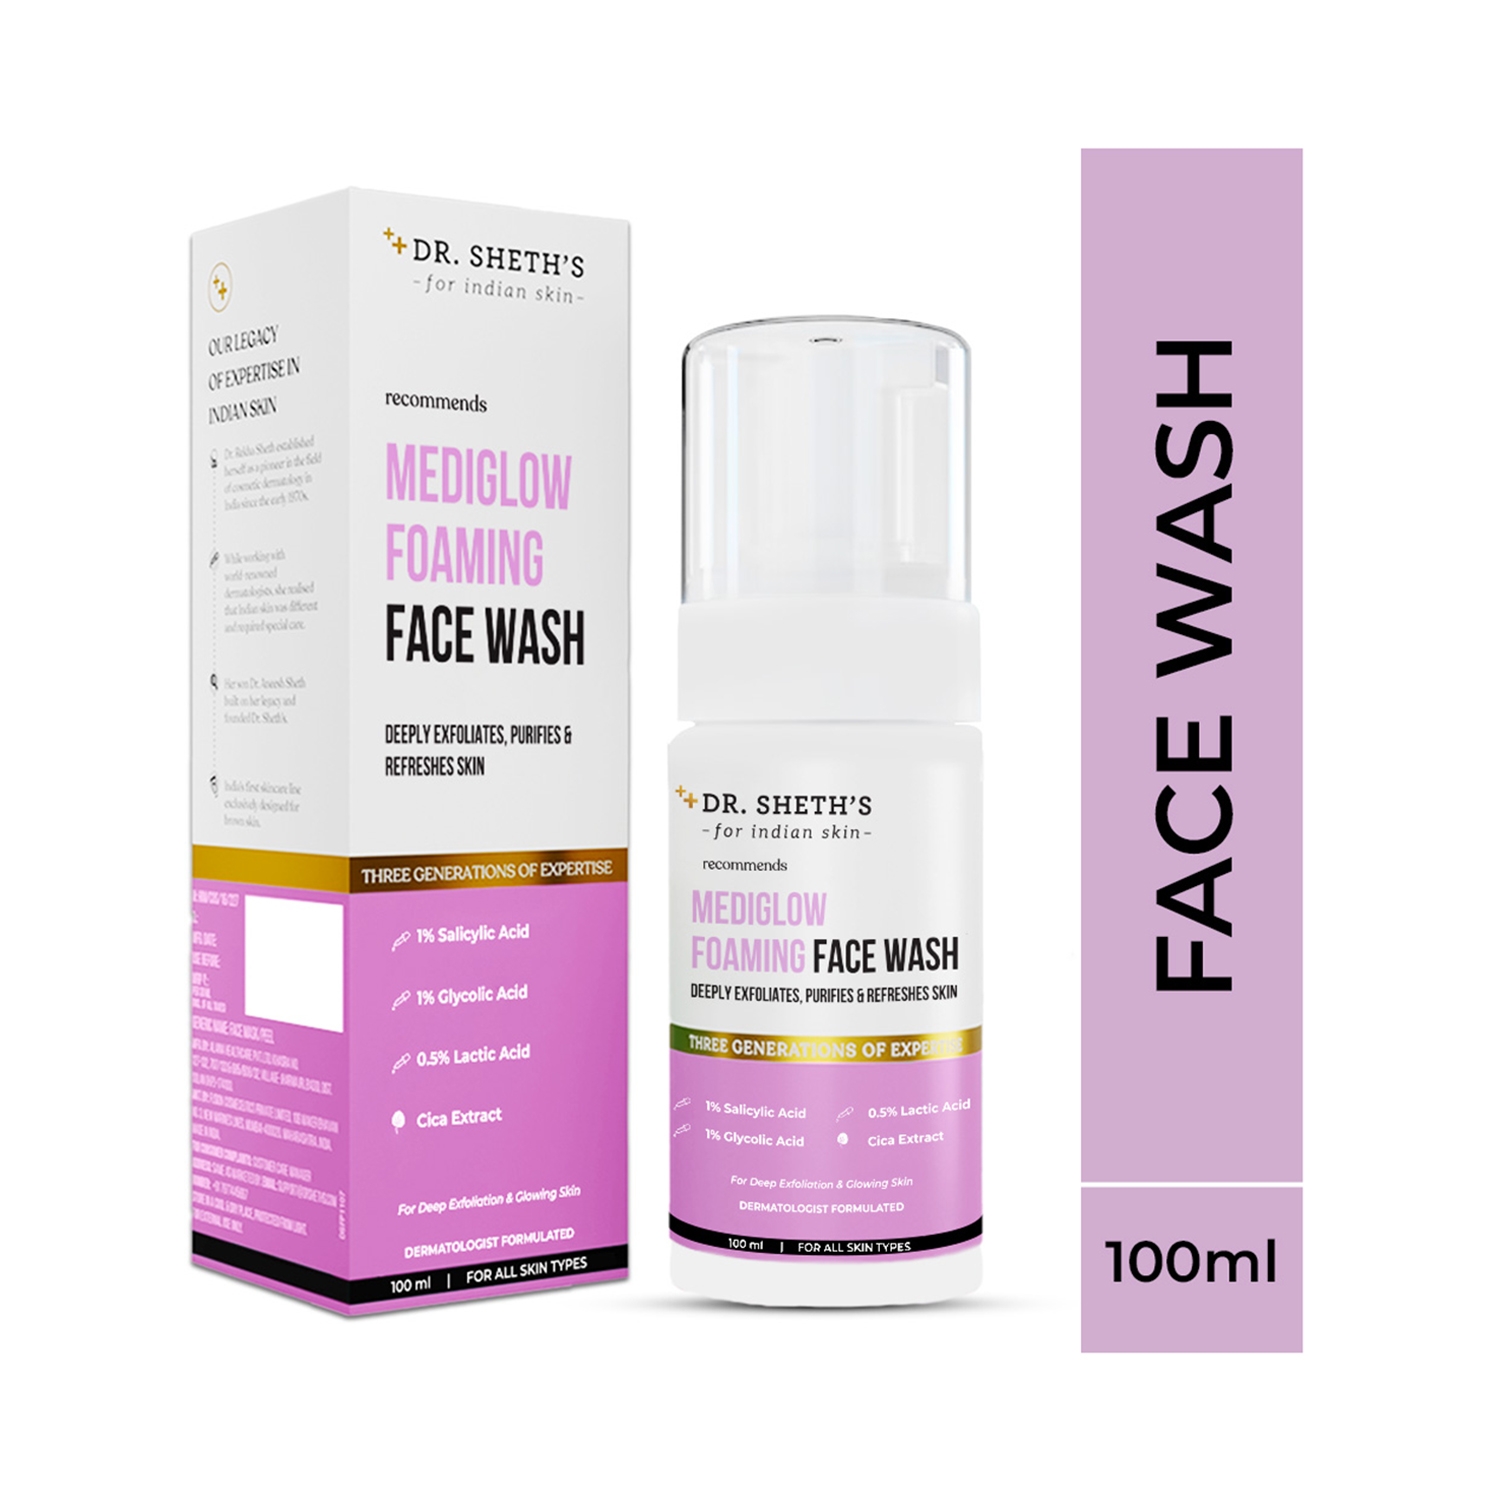 Dr. Sheth's Mediglow Foaming Face Wash (100ml)